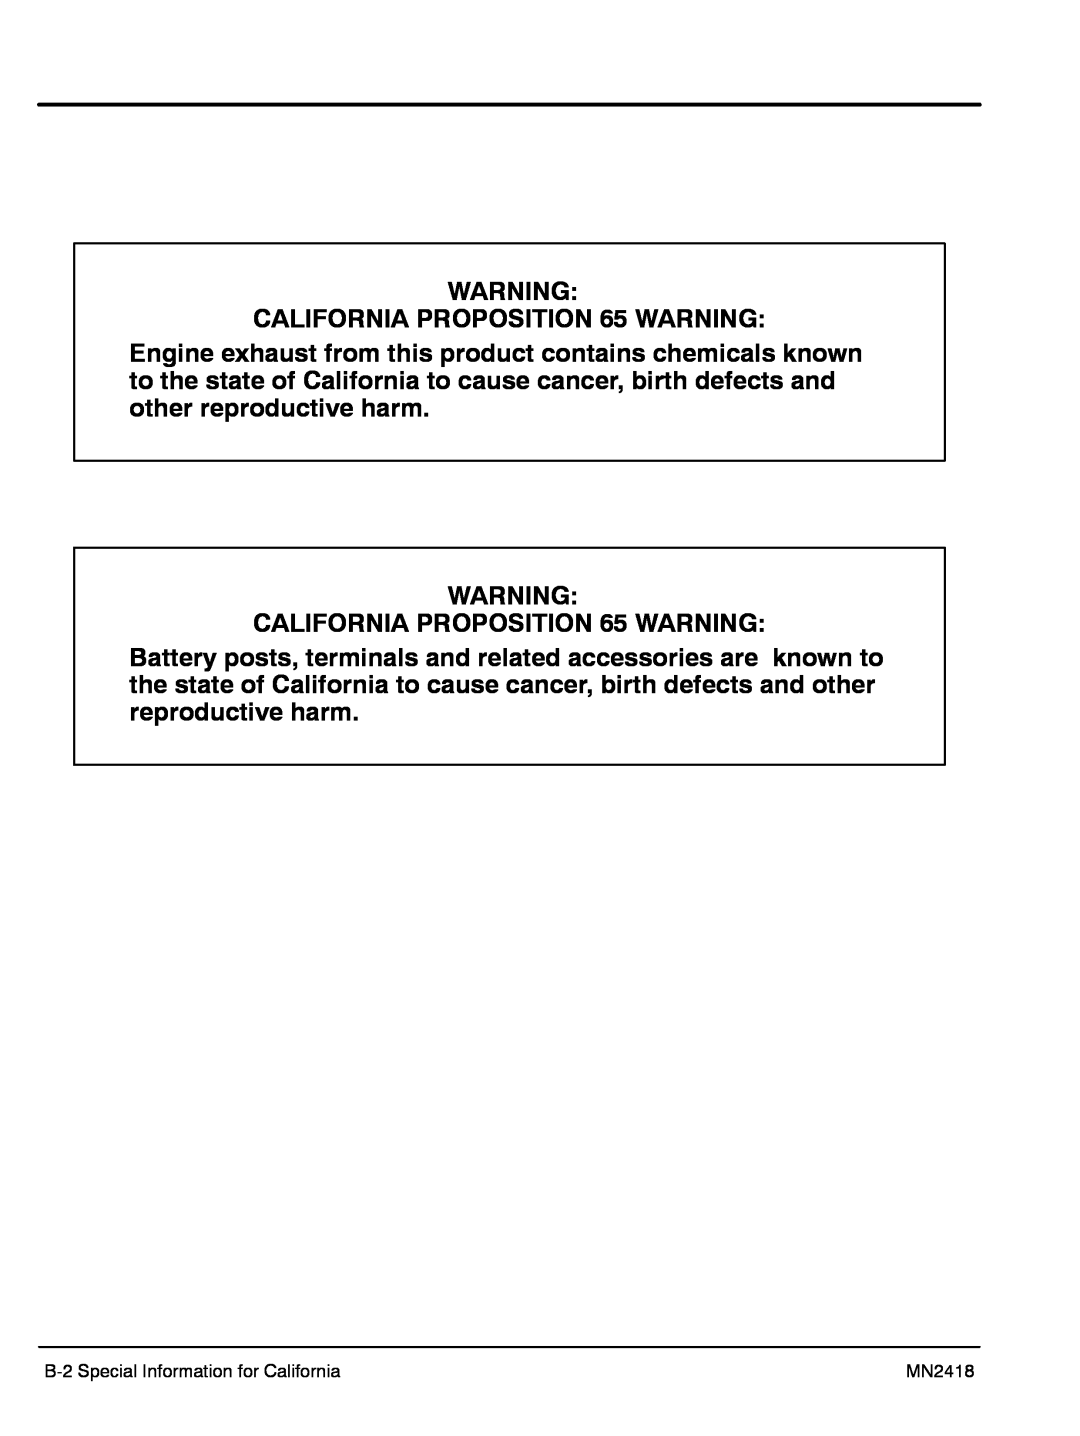 Baldor PG 6000 manual CALIFORNIA PROPOSITION 65 WARNING, B-2Special Information for California, MN2418 